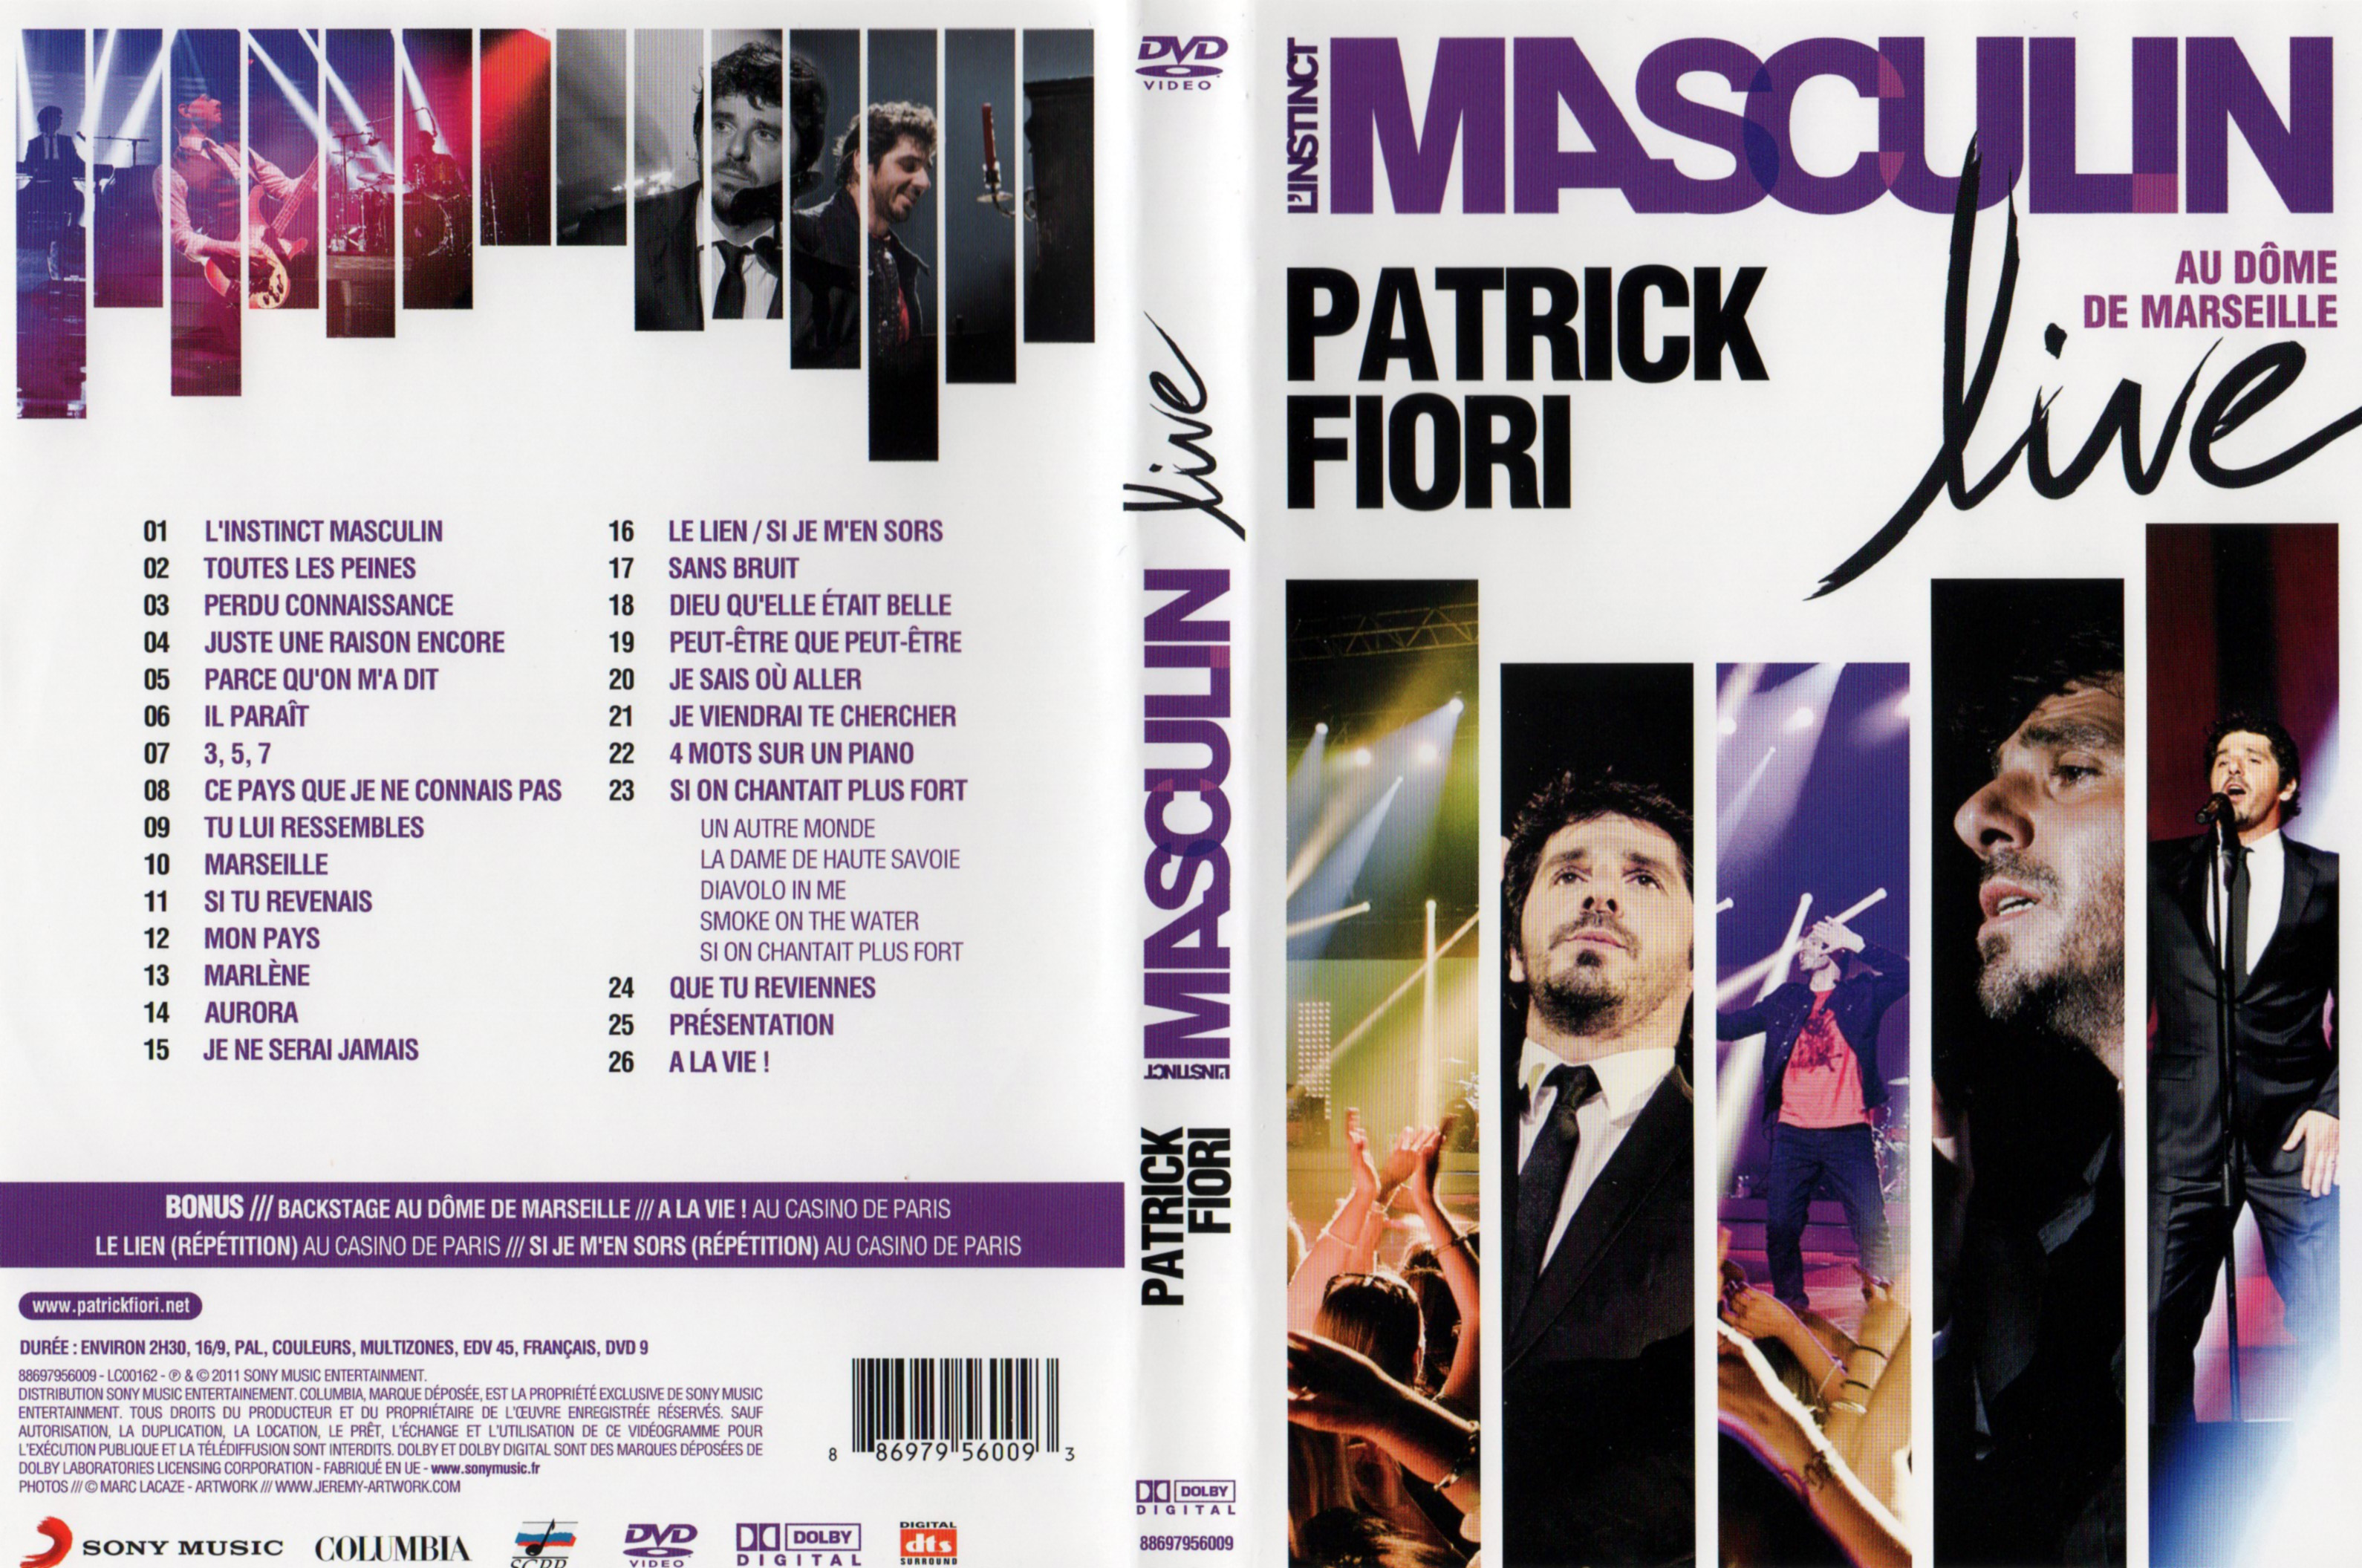 Jaquette DVD Patrick Fiori - L